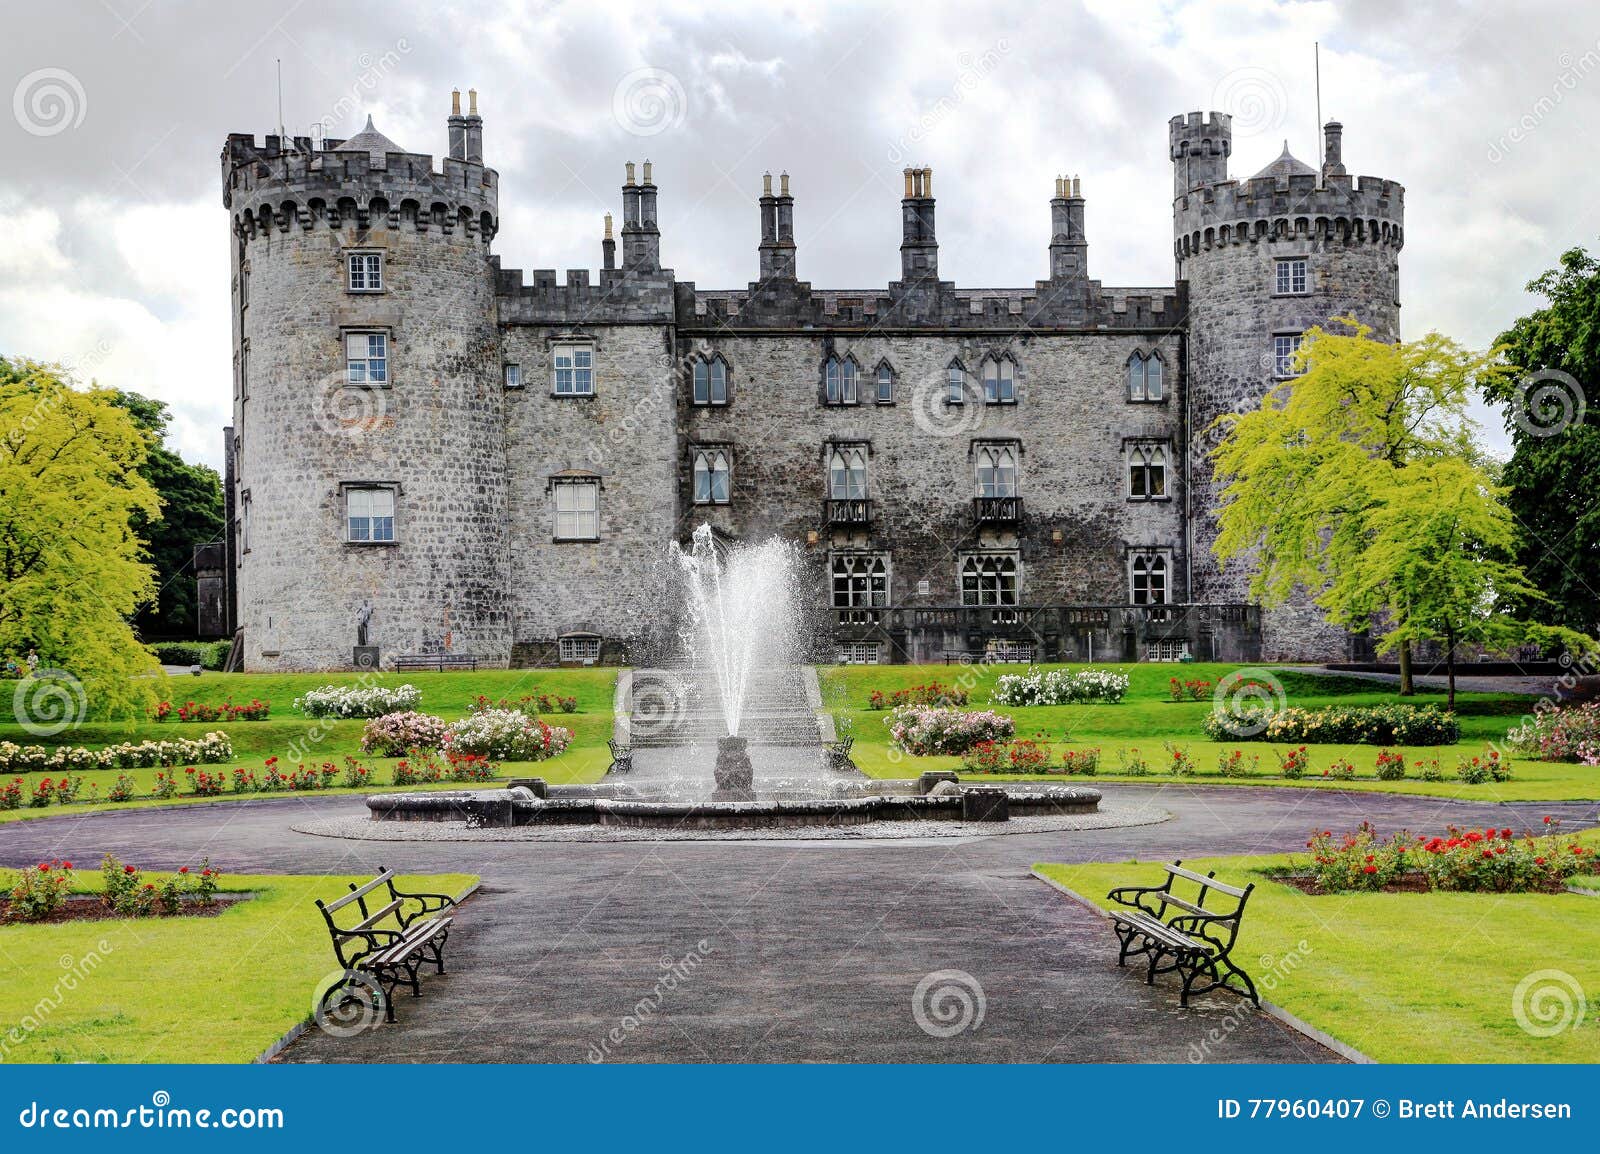 killkenny castle, ireland